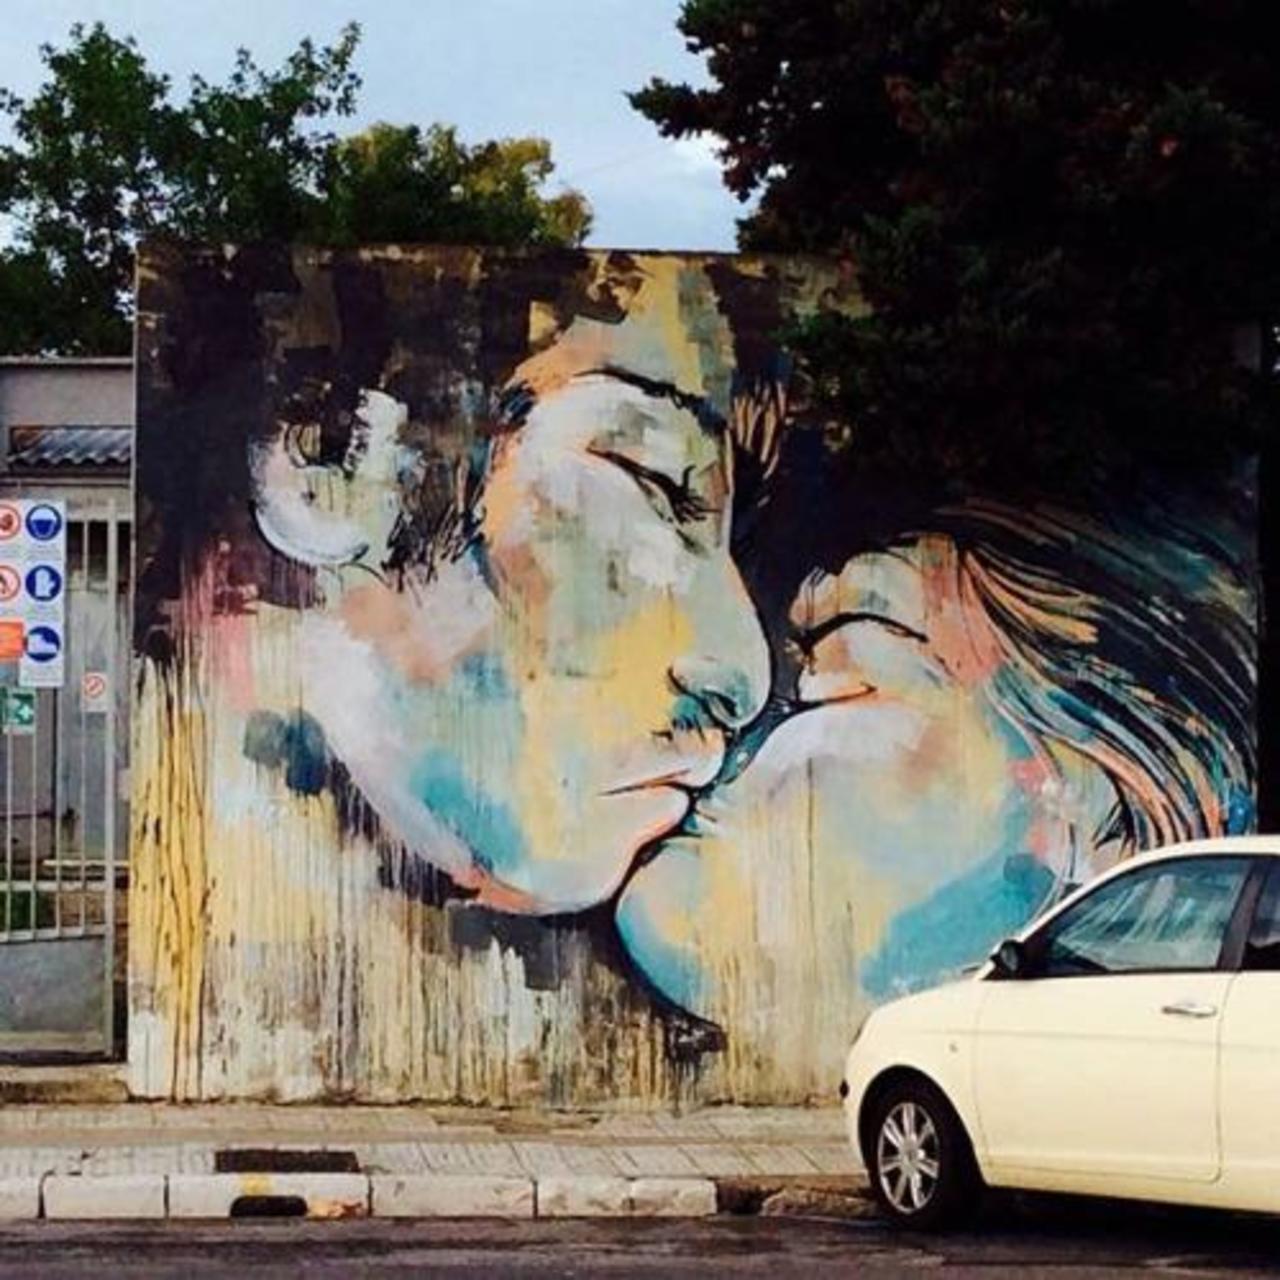 RT @alicepasquini: Alice Pasquini #memorieurbane #gaeta #streetart #graffiti... http://ift.tt/1PIeE7h #alicepasquini http://t.co/bqzpZjVQM0